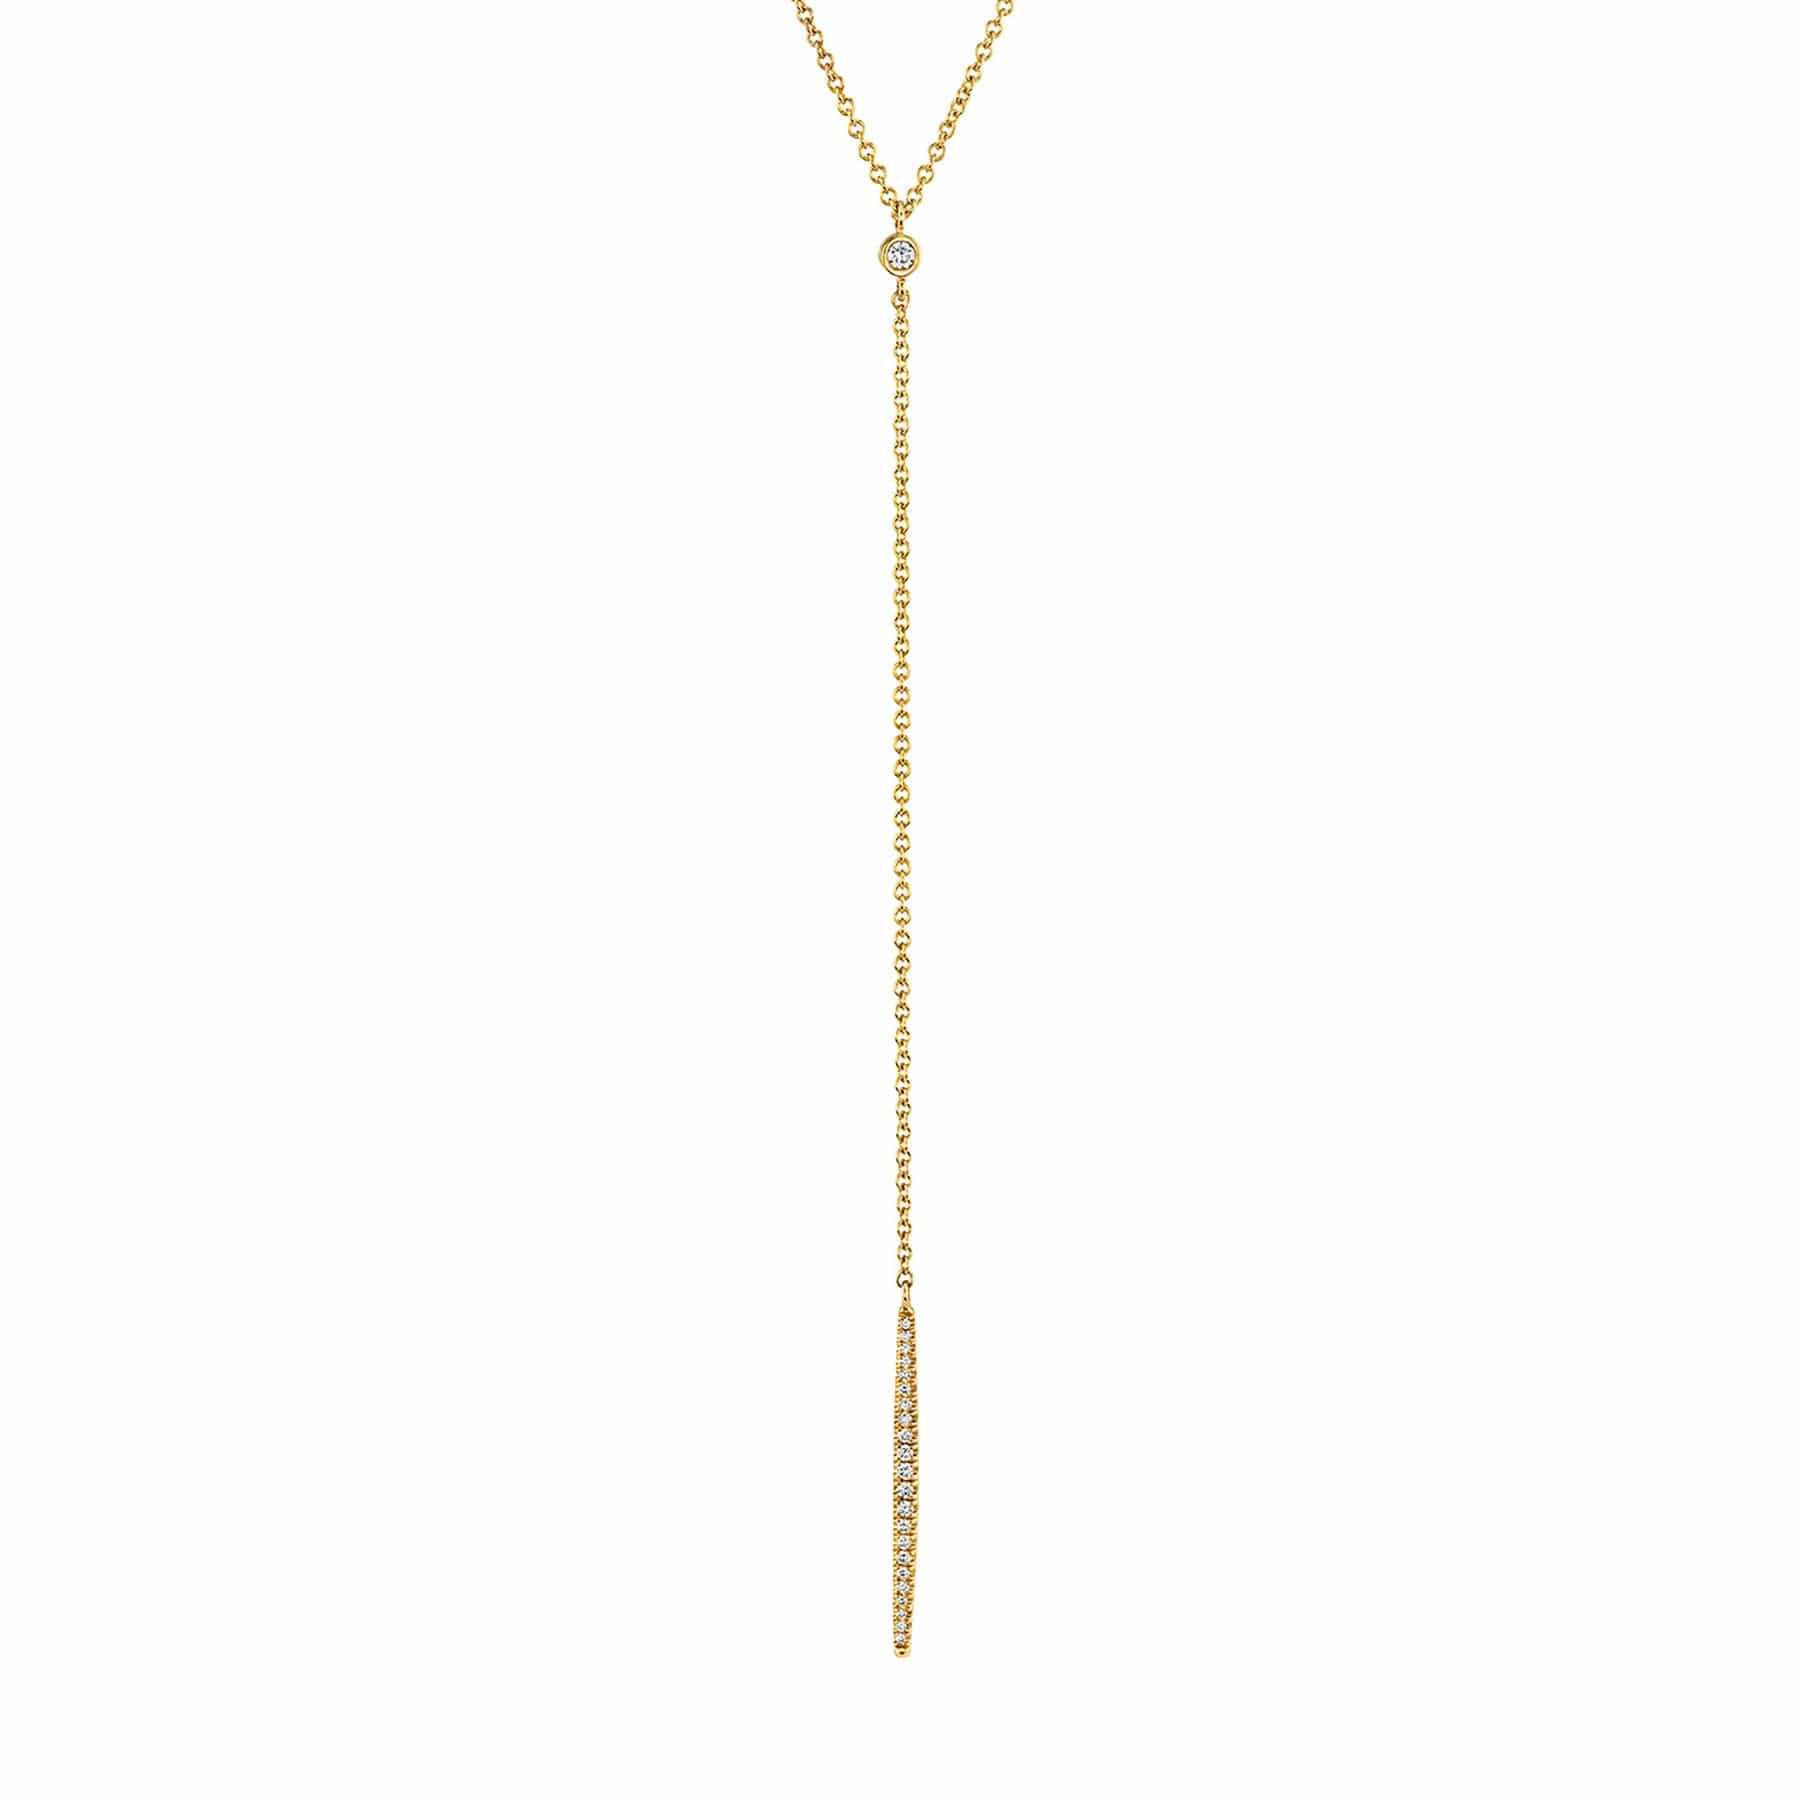 MICHAEL M Necklaces 14K Yellow Gold Diamond Linear Drop Necklace CN216-YG